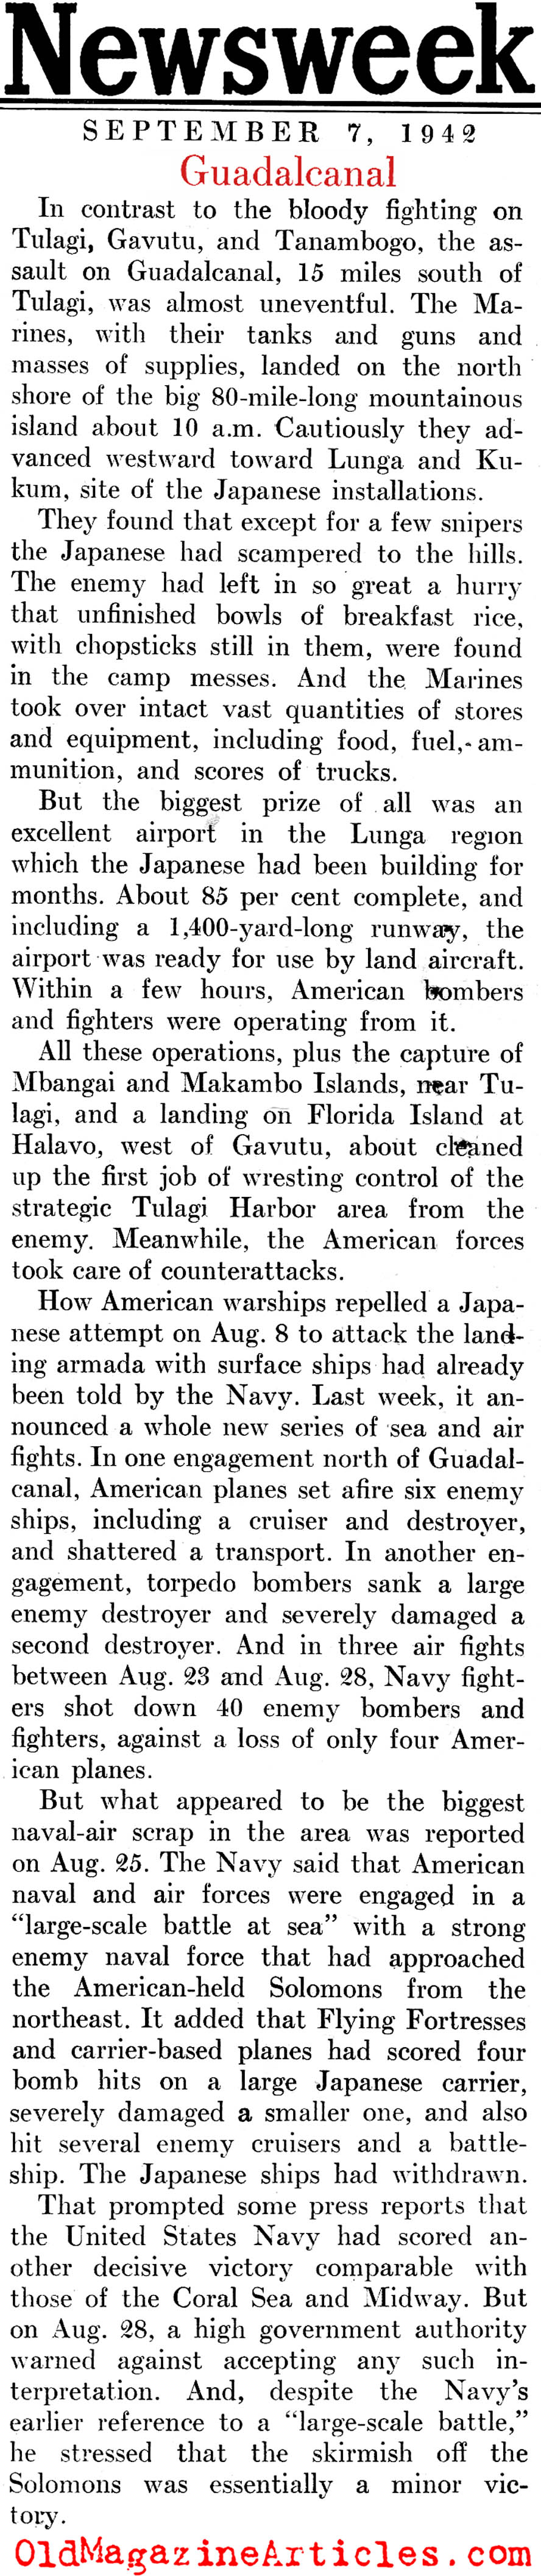 Guadalcanal (Newsweek Magazine, 1942)